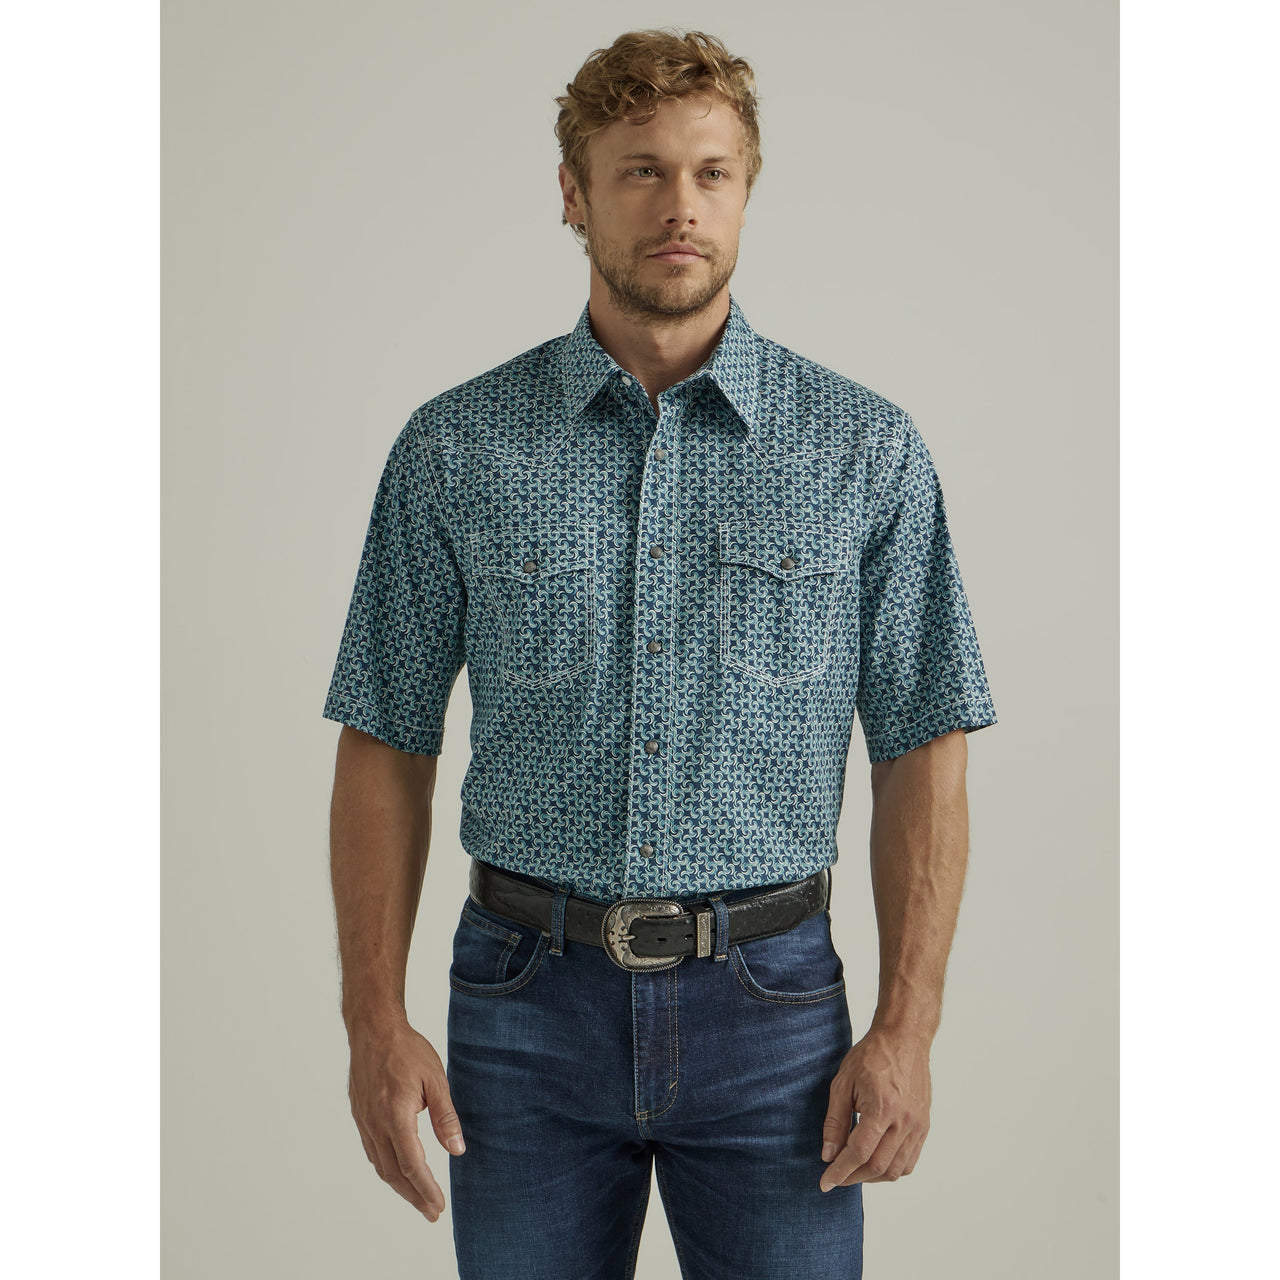 Wrangler Men's 20X Advanced Comfort Short Sleeve Shirt - Blue